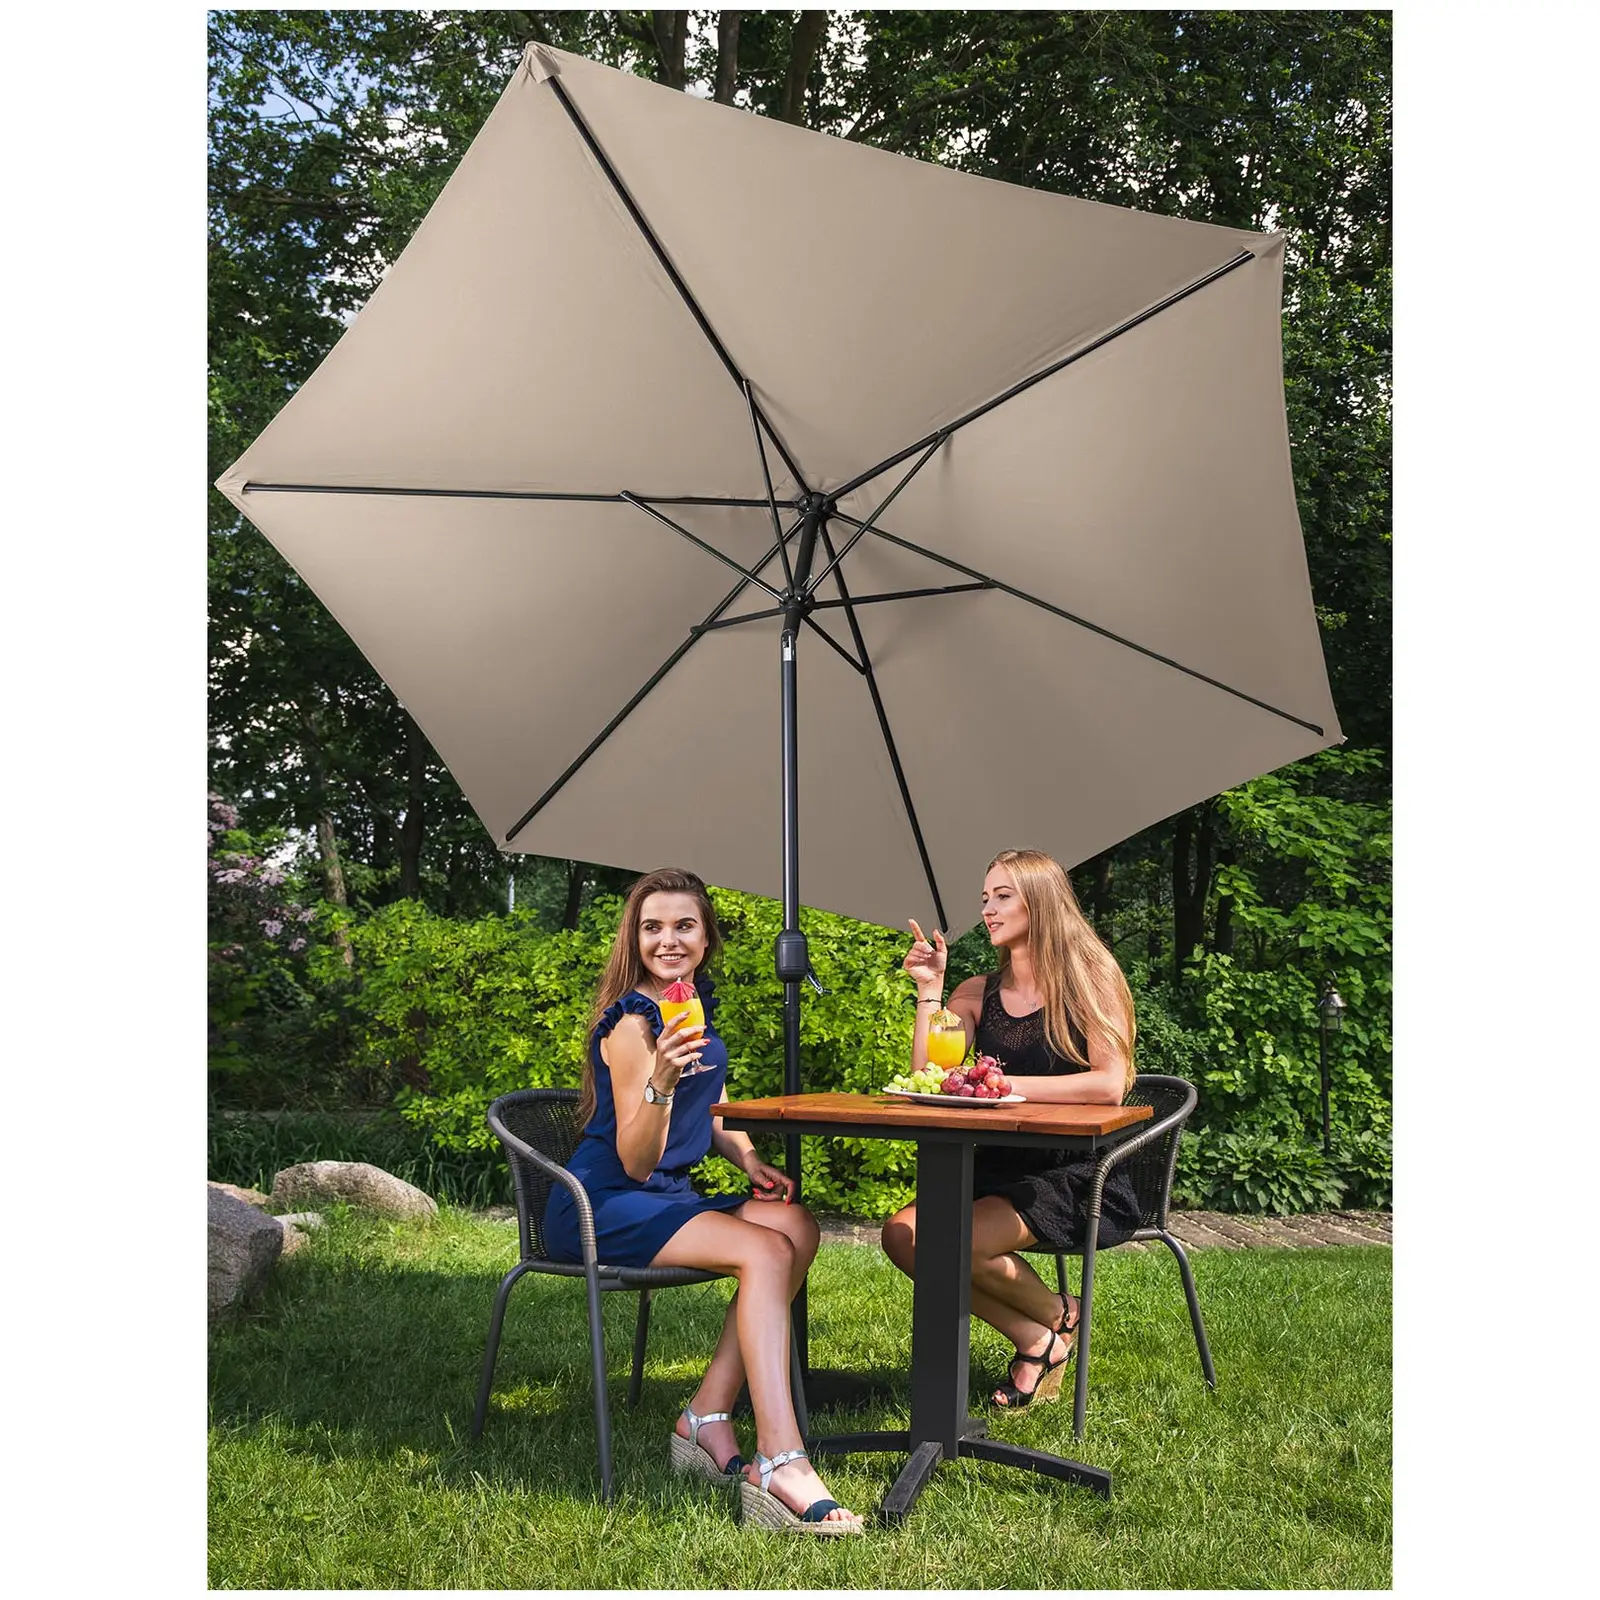 Sonnenschirm groß - cremefarben - sechseckig - Ø 270 cm - neigbar